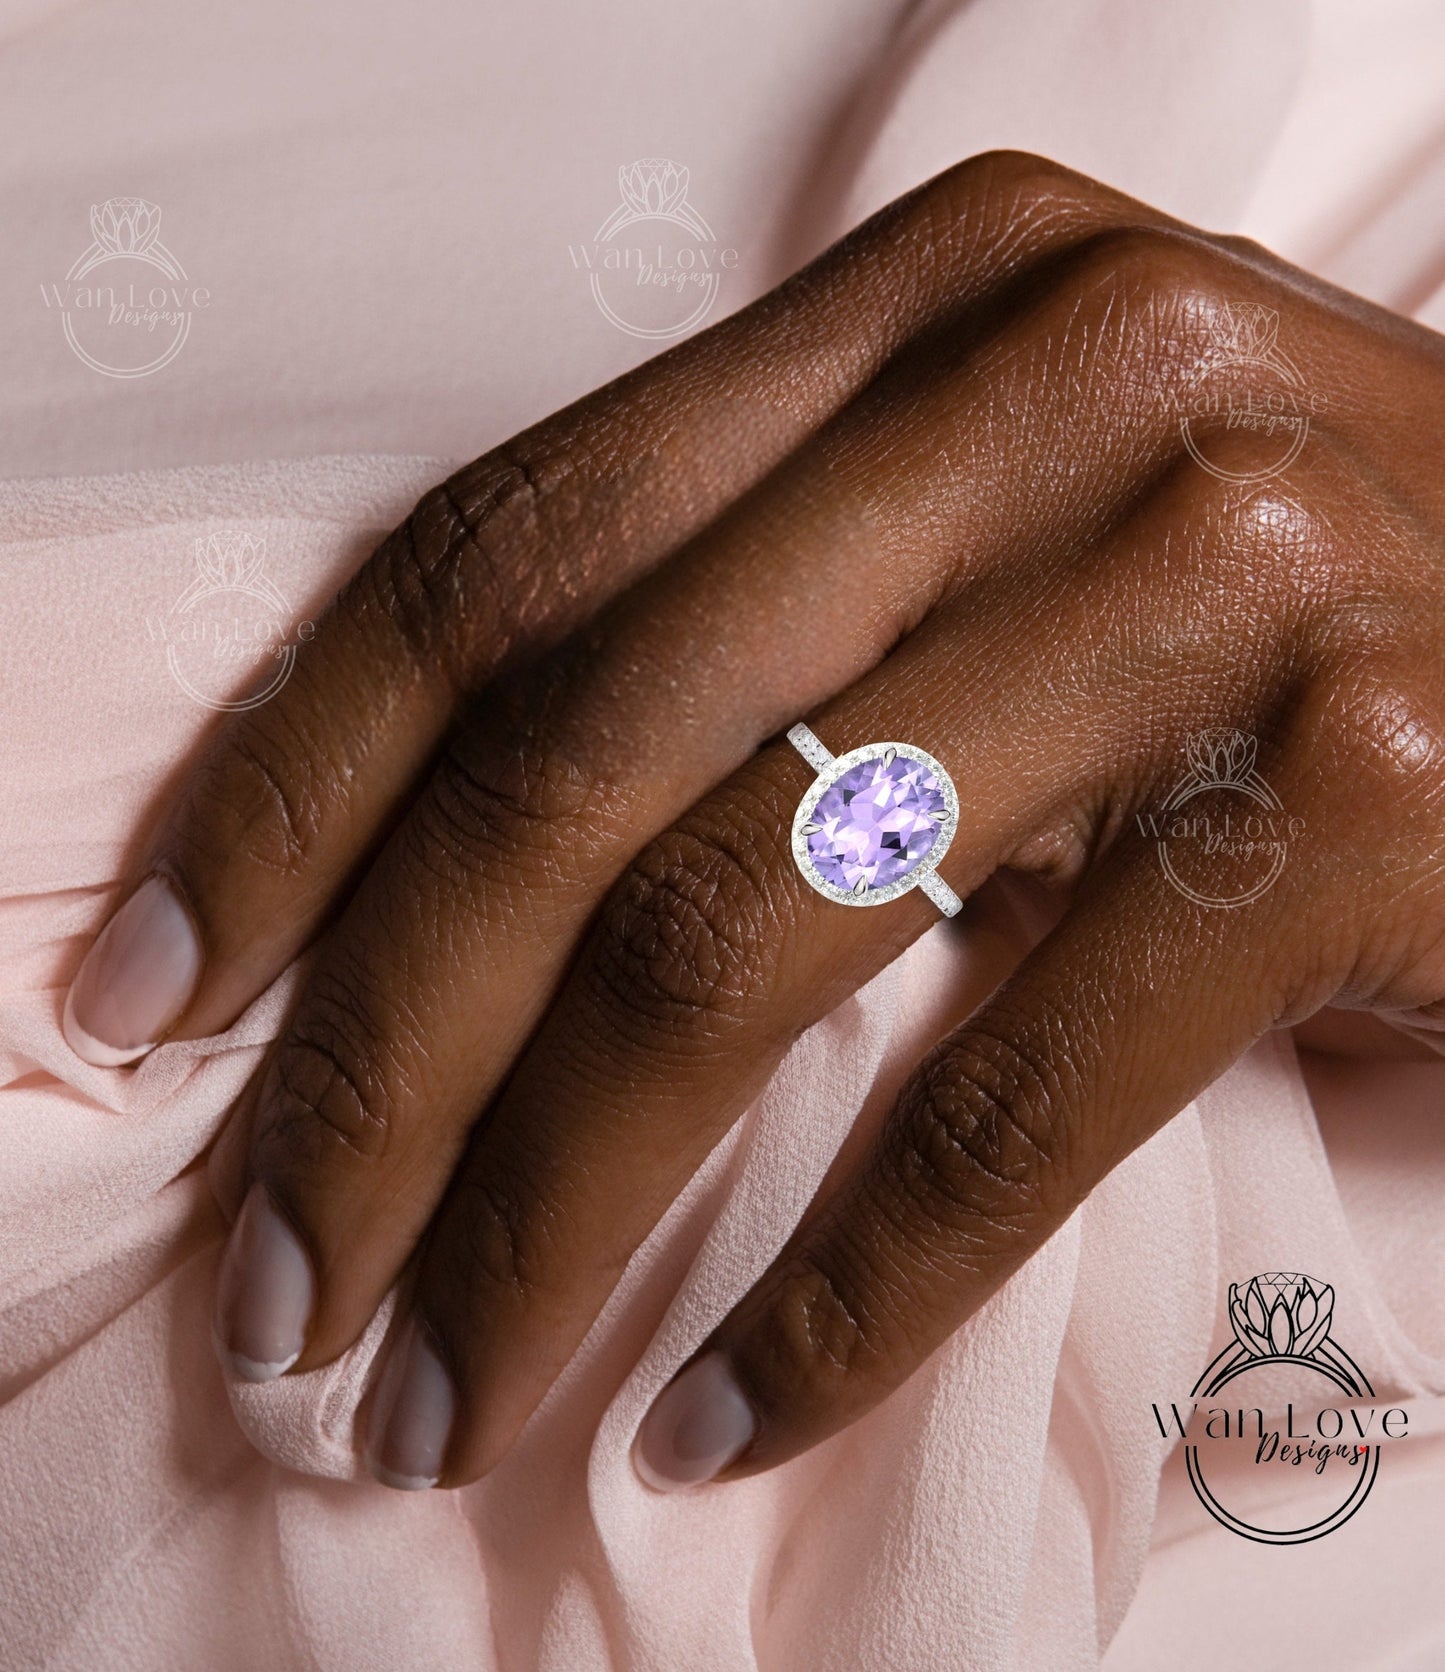 Oval cut Lavender Amethyst engagement ring art deco ring halo moissanite/diamond ring vintage rose gold half eternity aniversary bridal ring Wan Love Designs